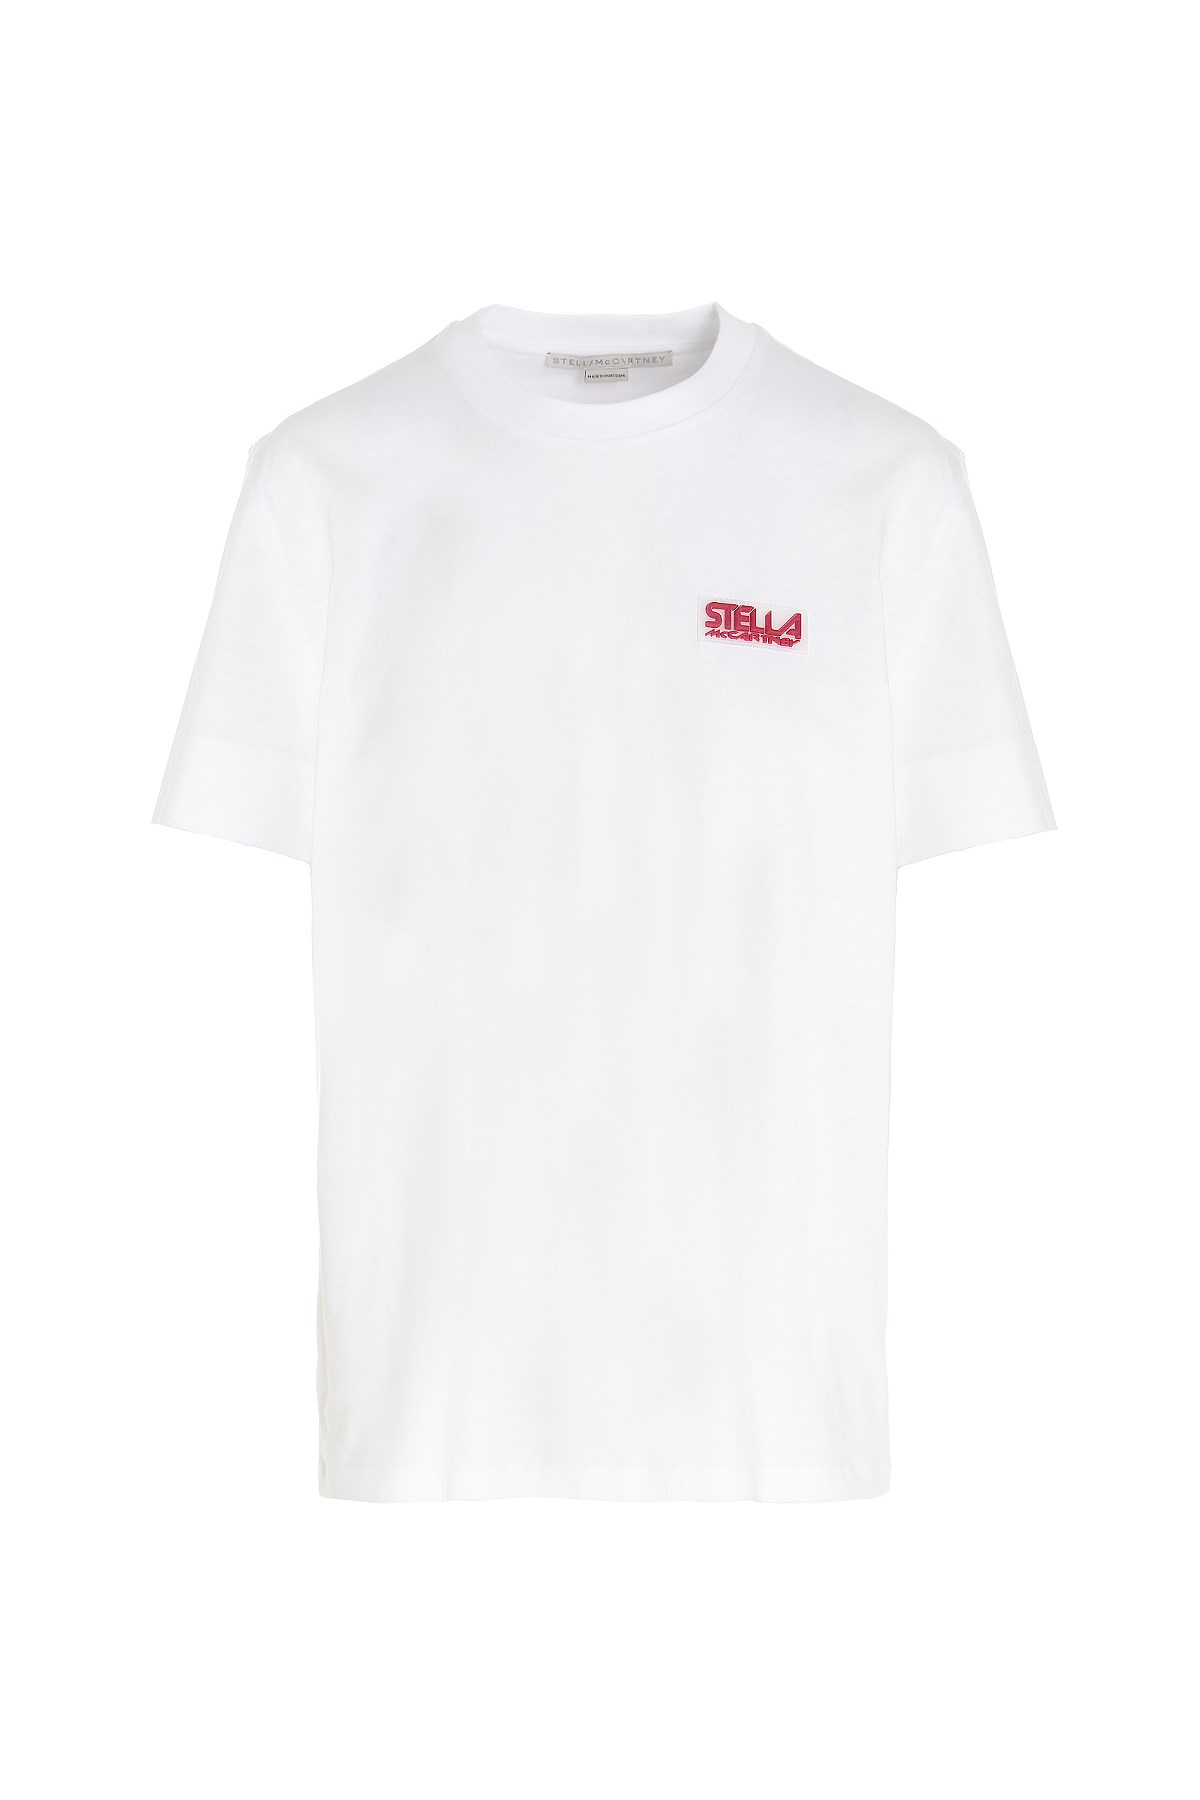 STELLA MCCARTNEY T-Shirt Mit Logoaufnäher